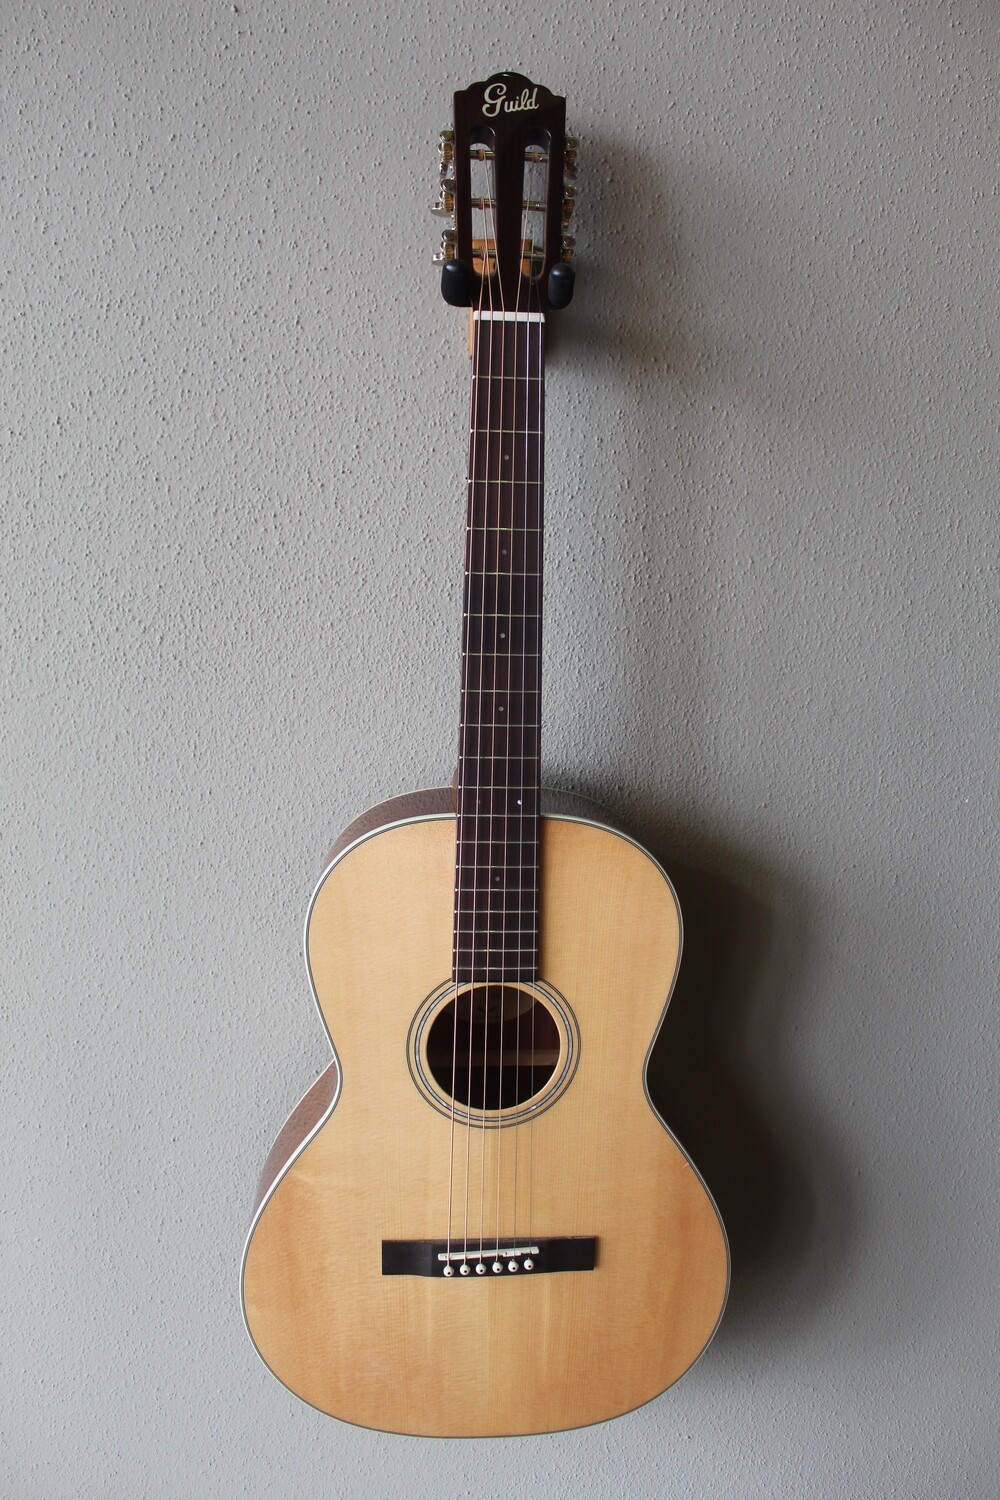 Guild P-240 Memoir Parlor Size Steel String Acoustic Guitar with Gig Bag